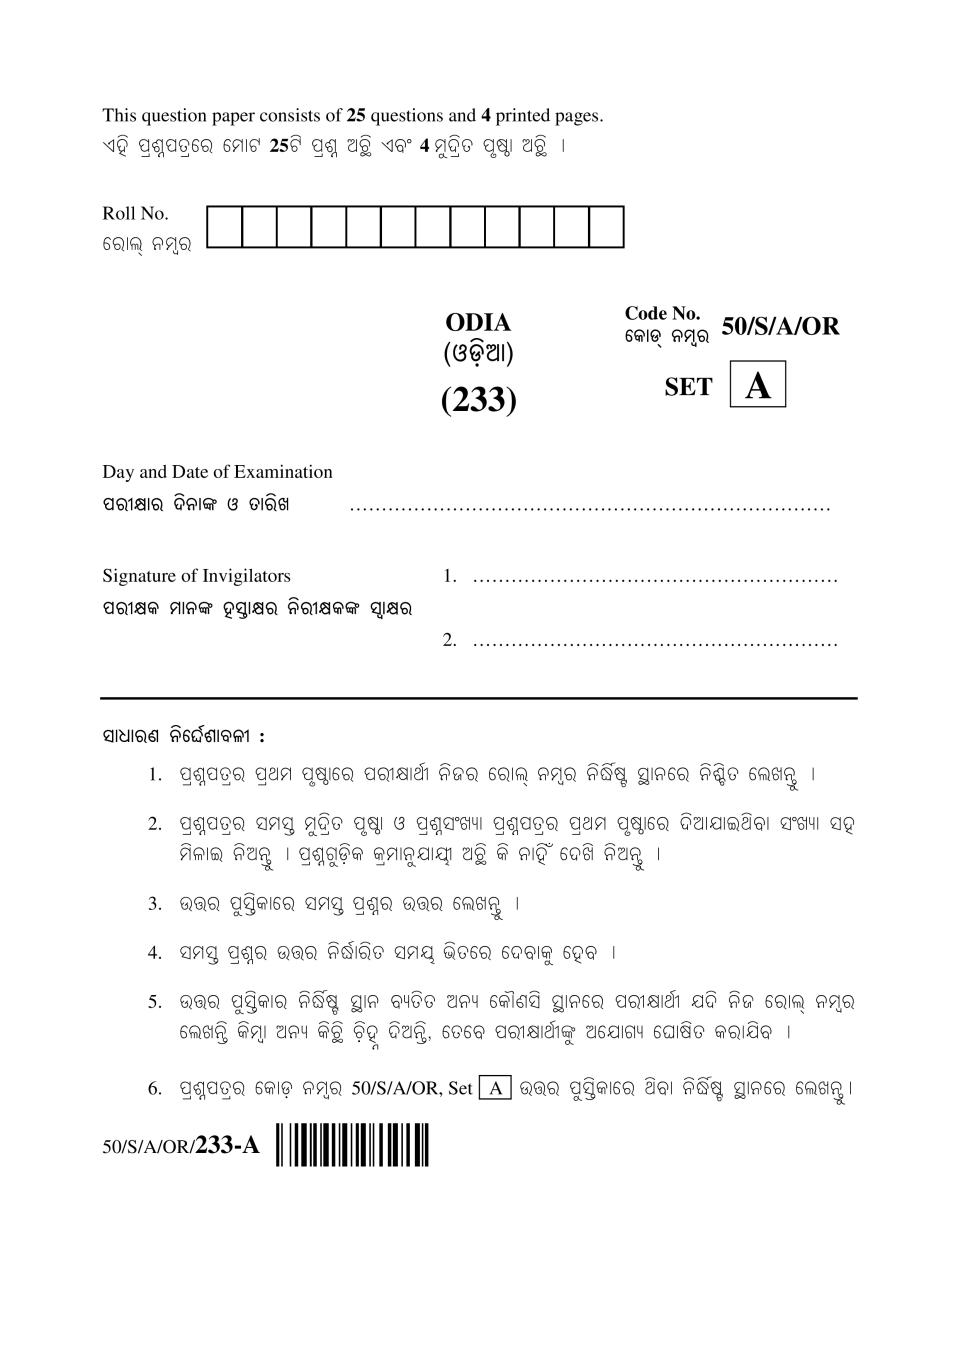 NIOS Class 10 Question Paper Apr 2015 - Odia - Page 1